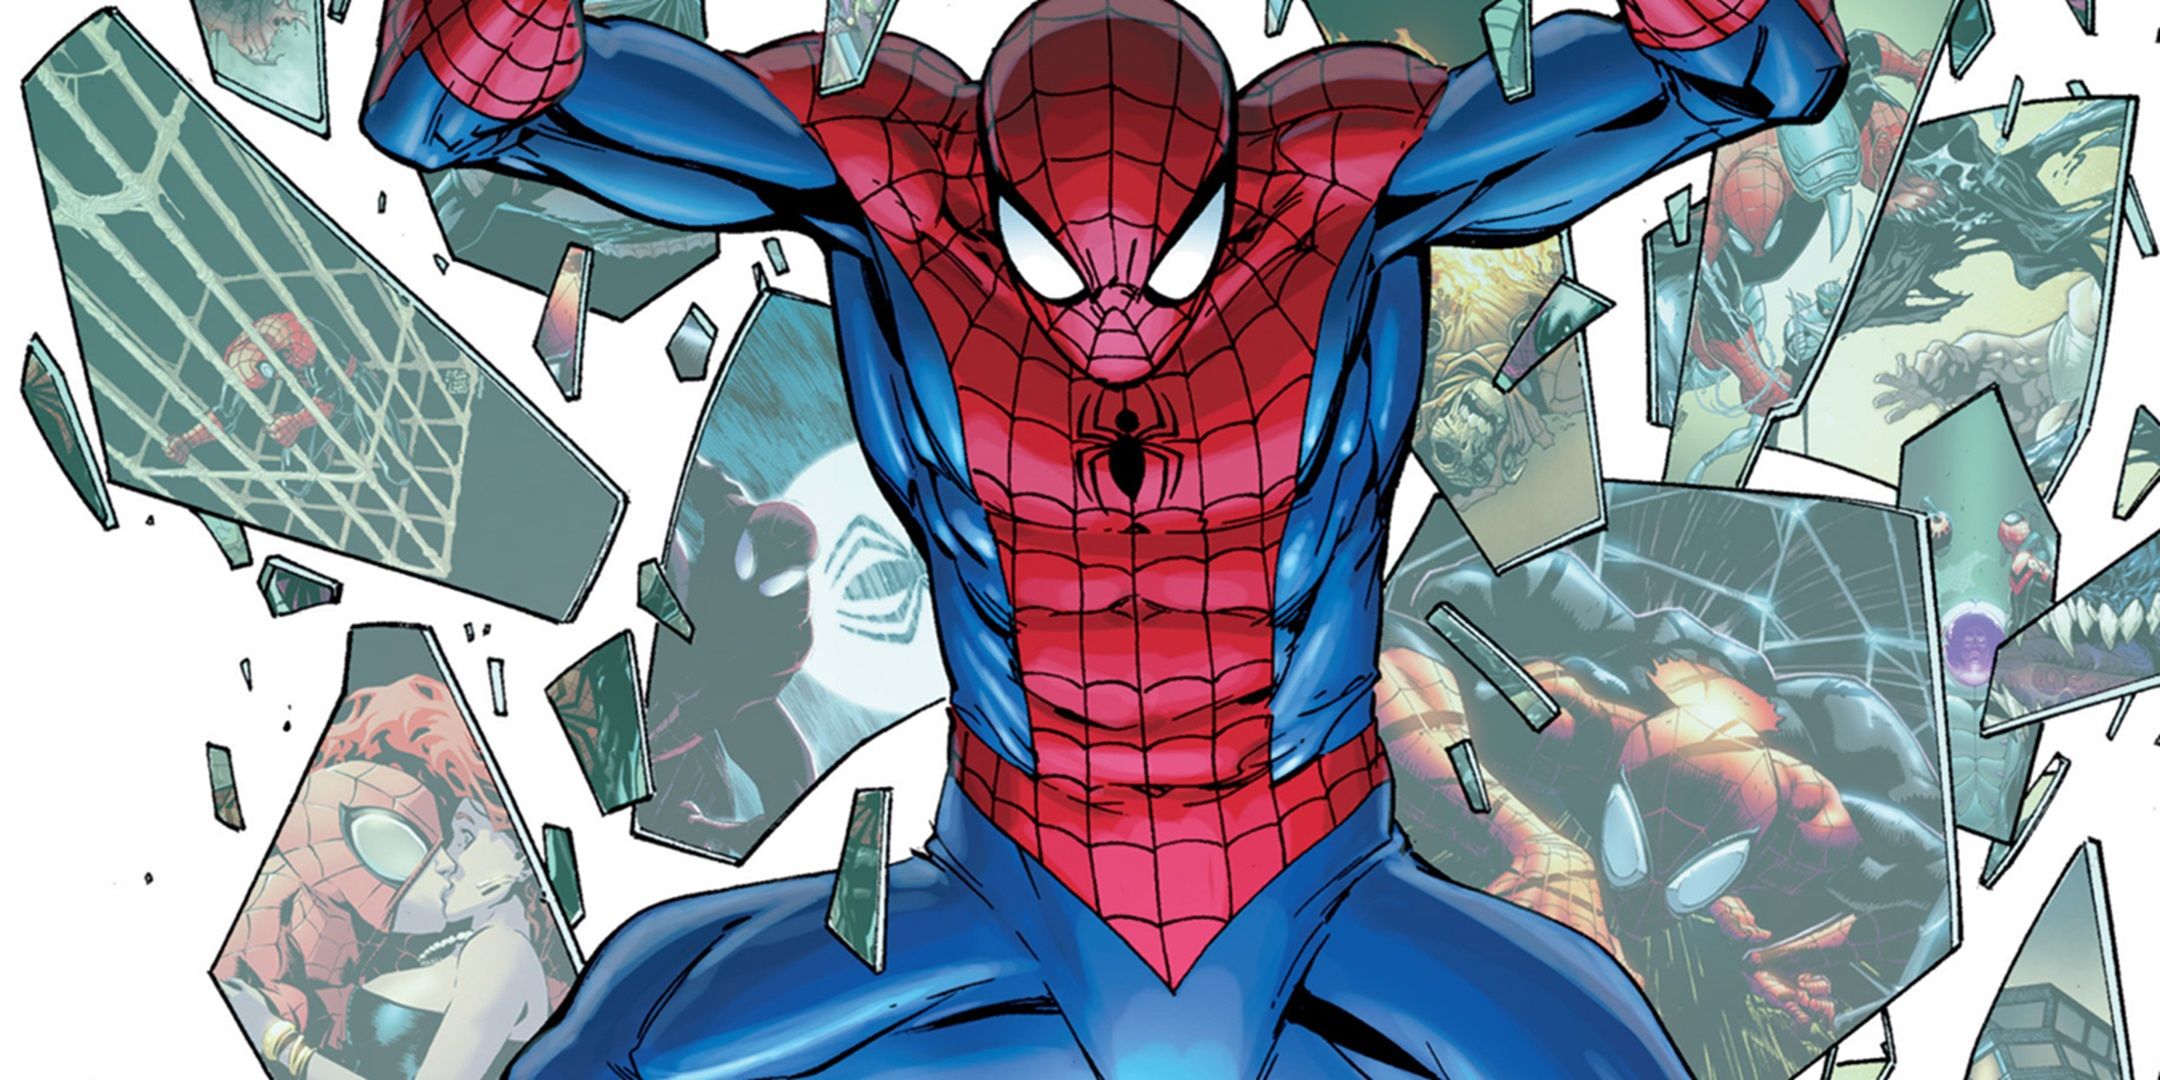 Peter returns as Spider-Man